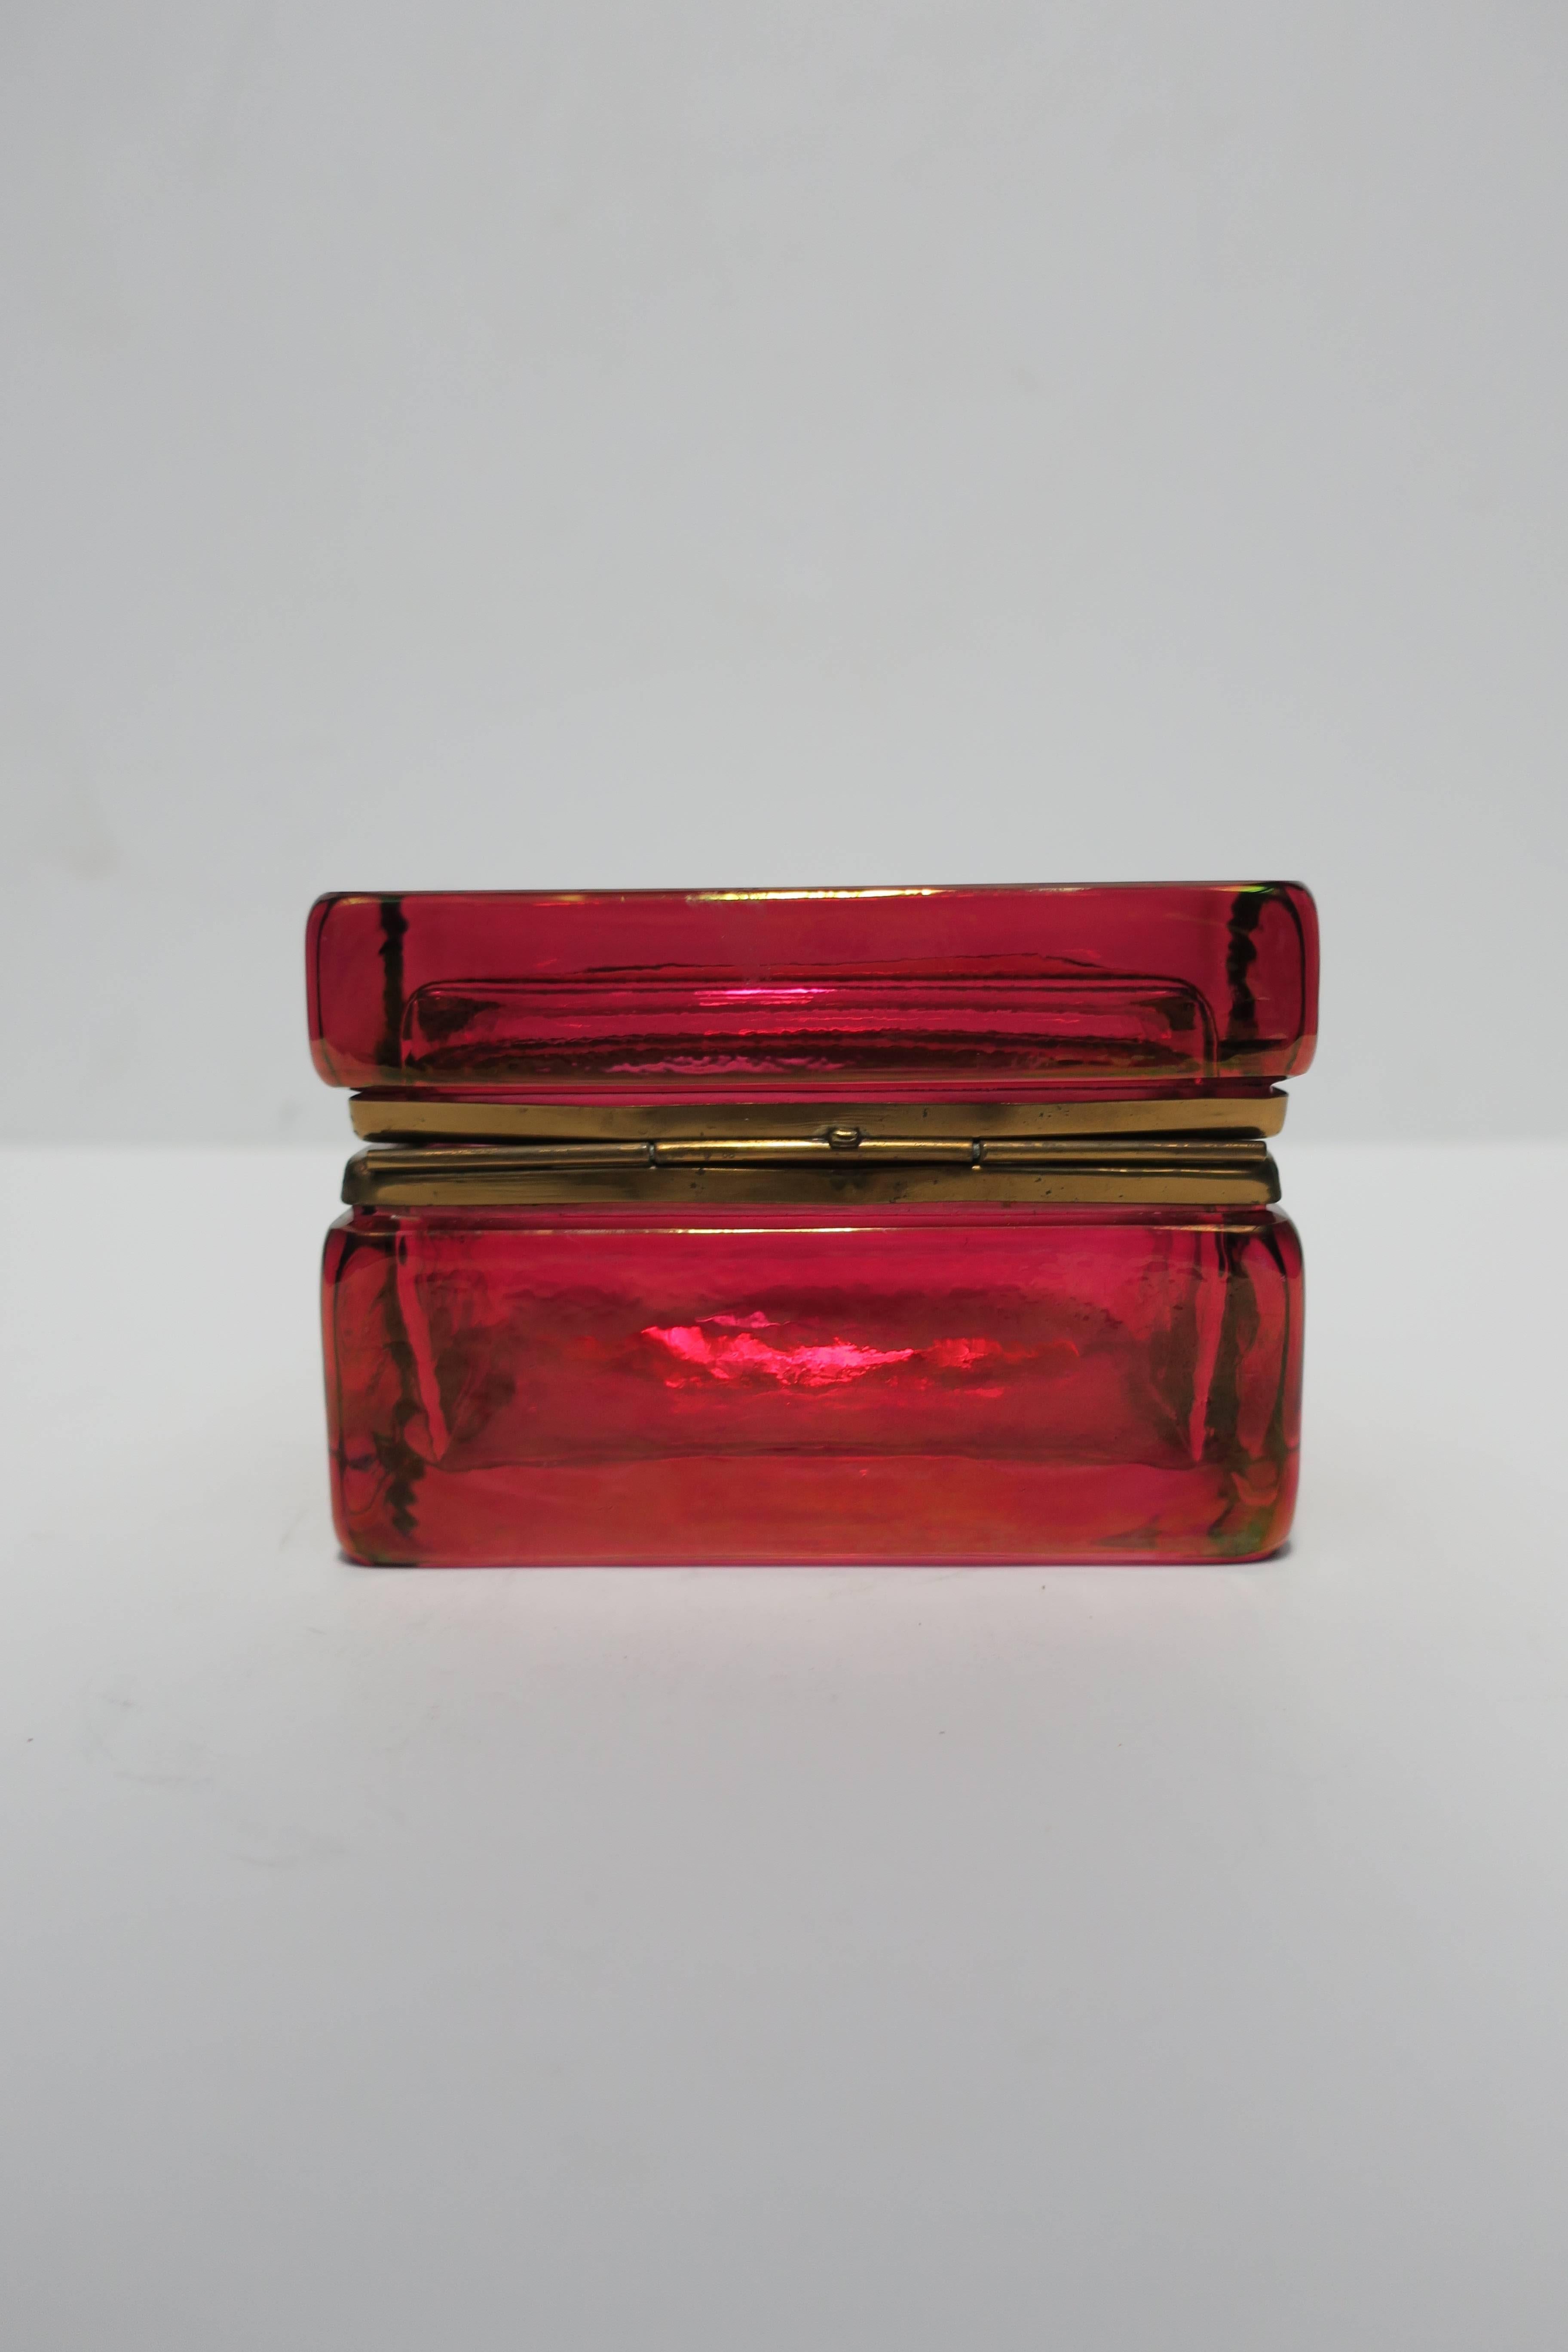 Vintage Modern Italian Red Art Glass and Brass Jewelry Box 3